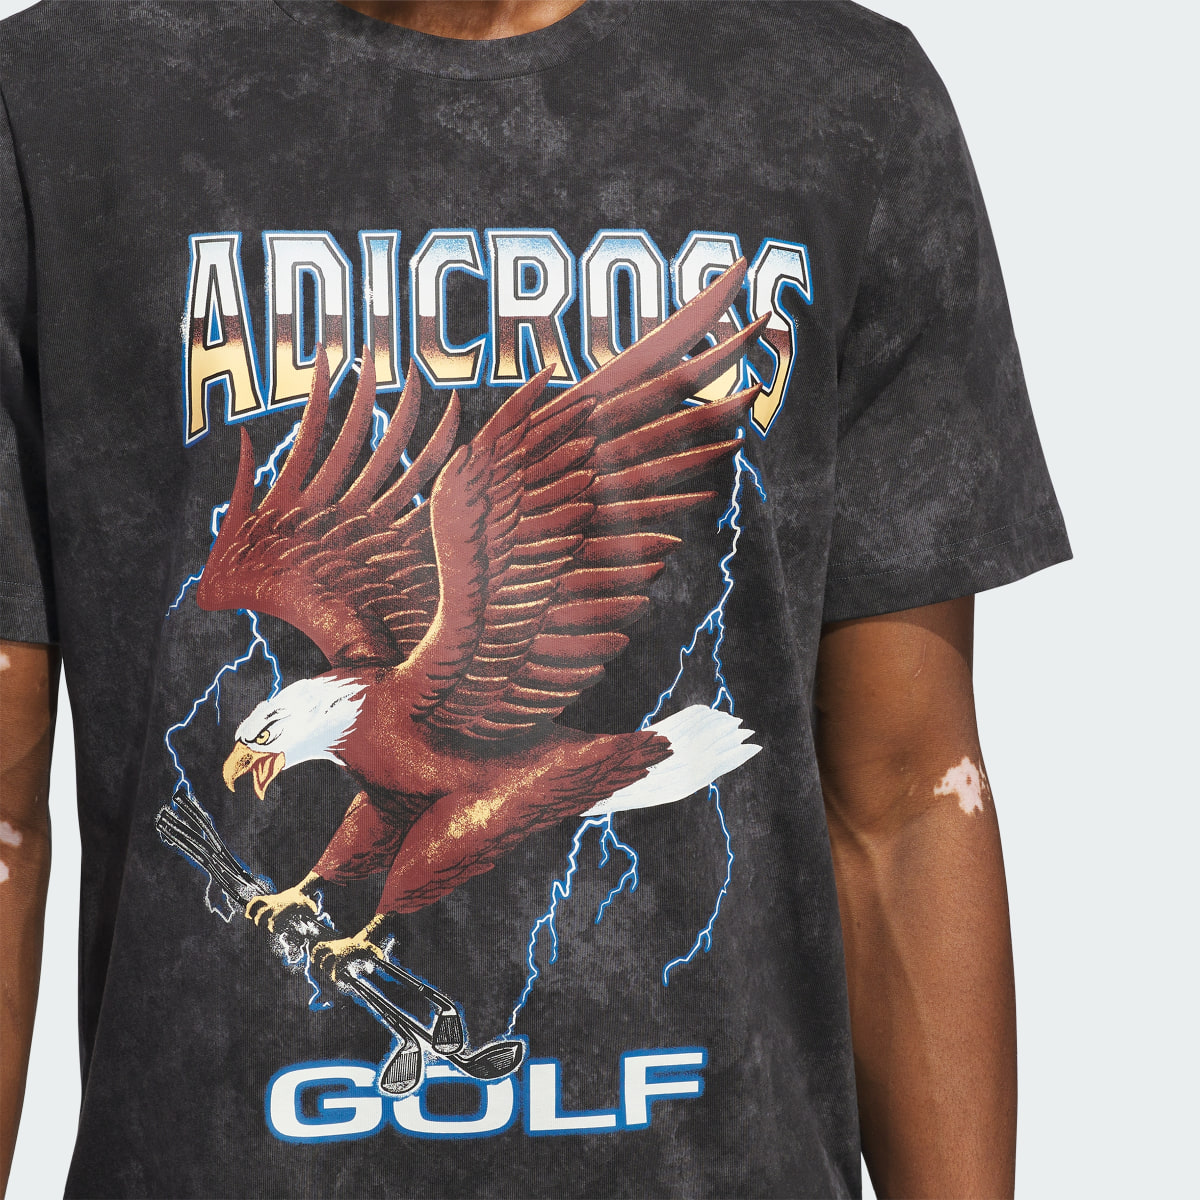 Adidas Camiseta Adicross Eagle Graphic. 6